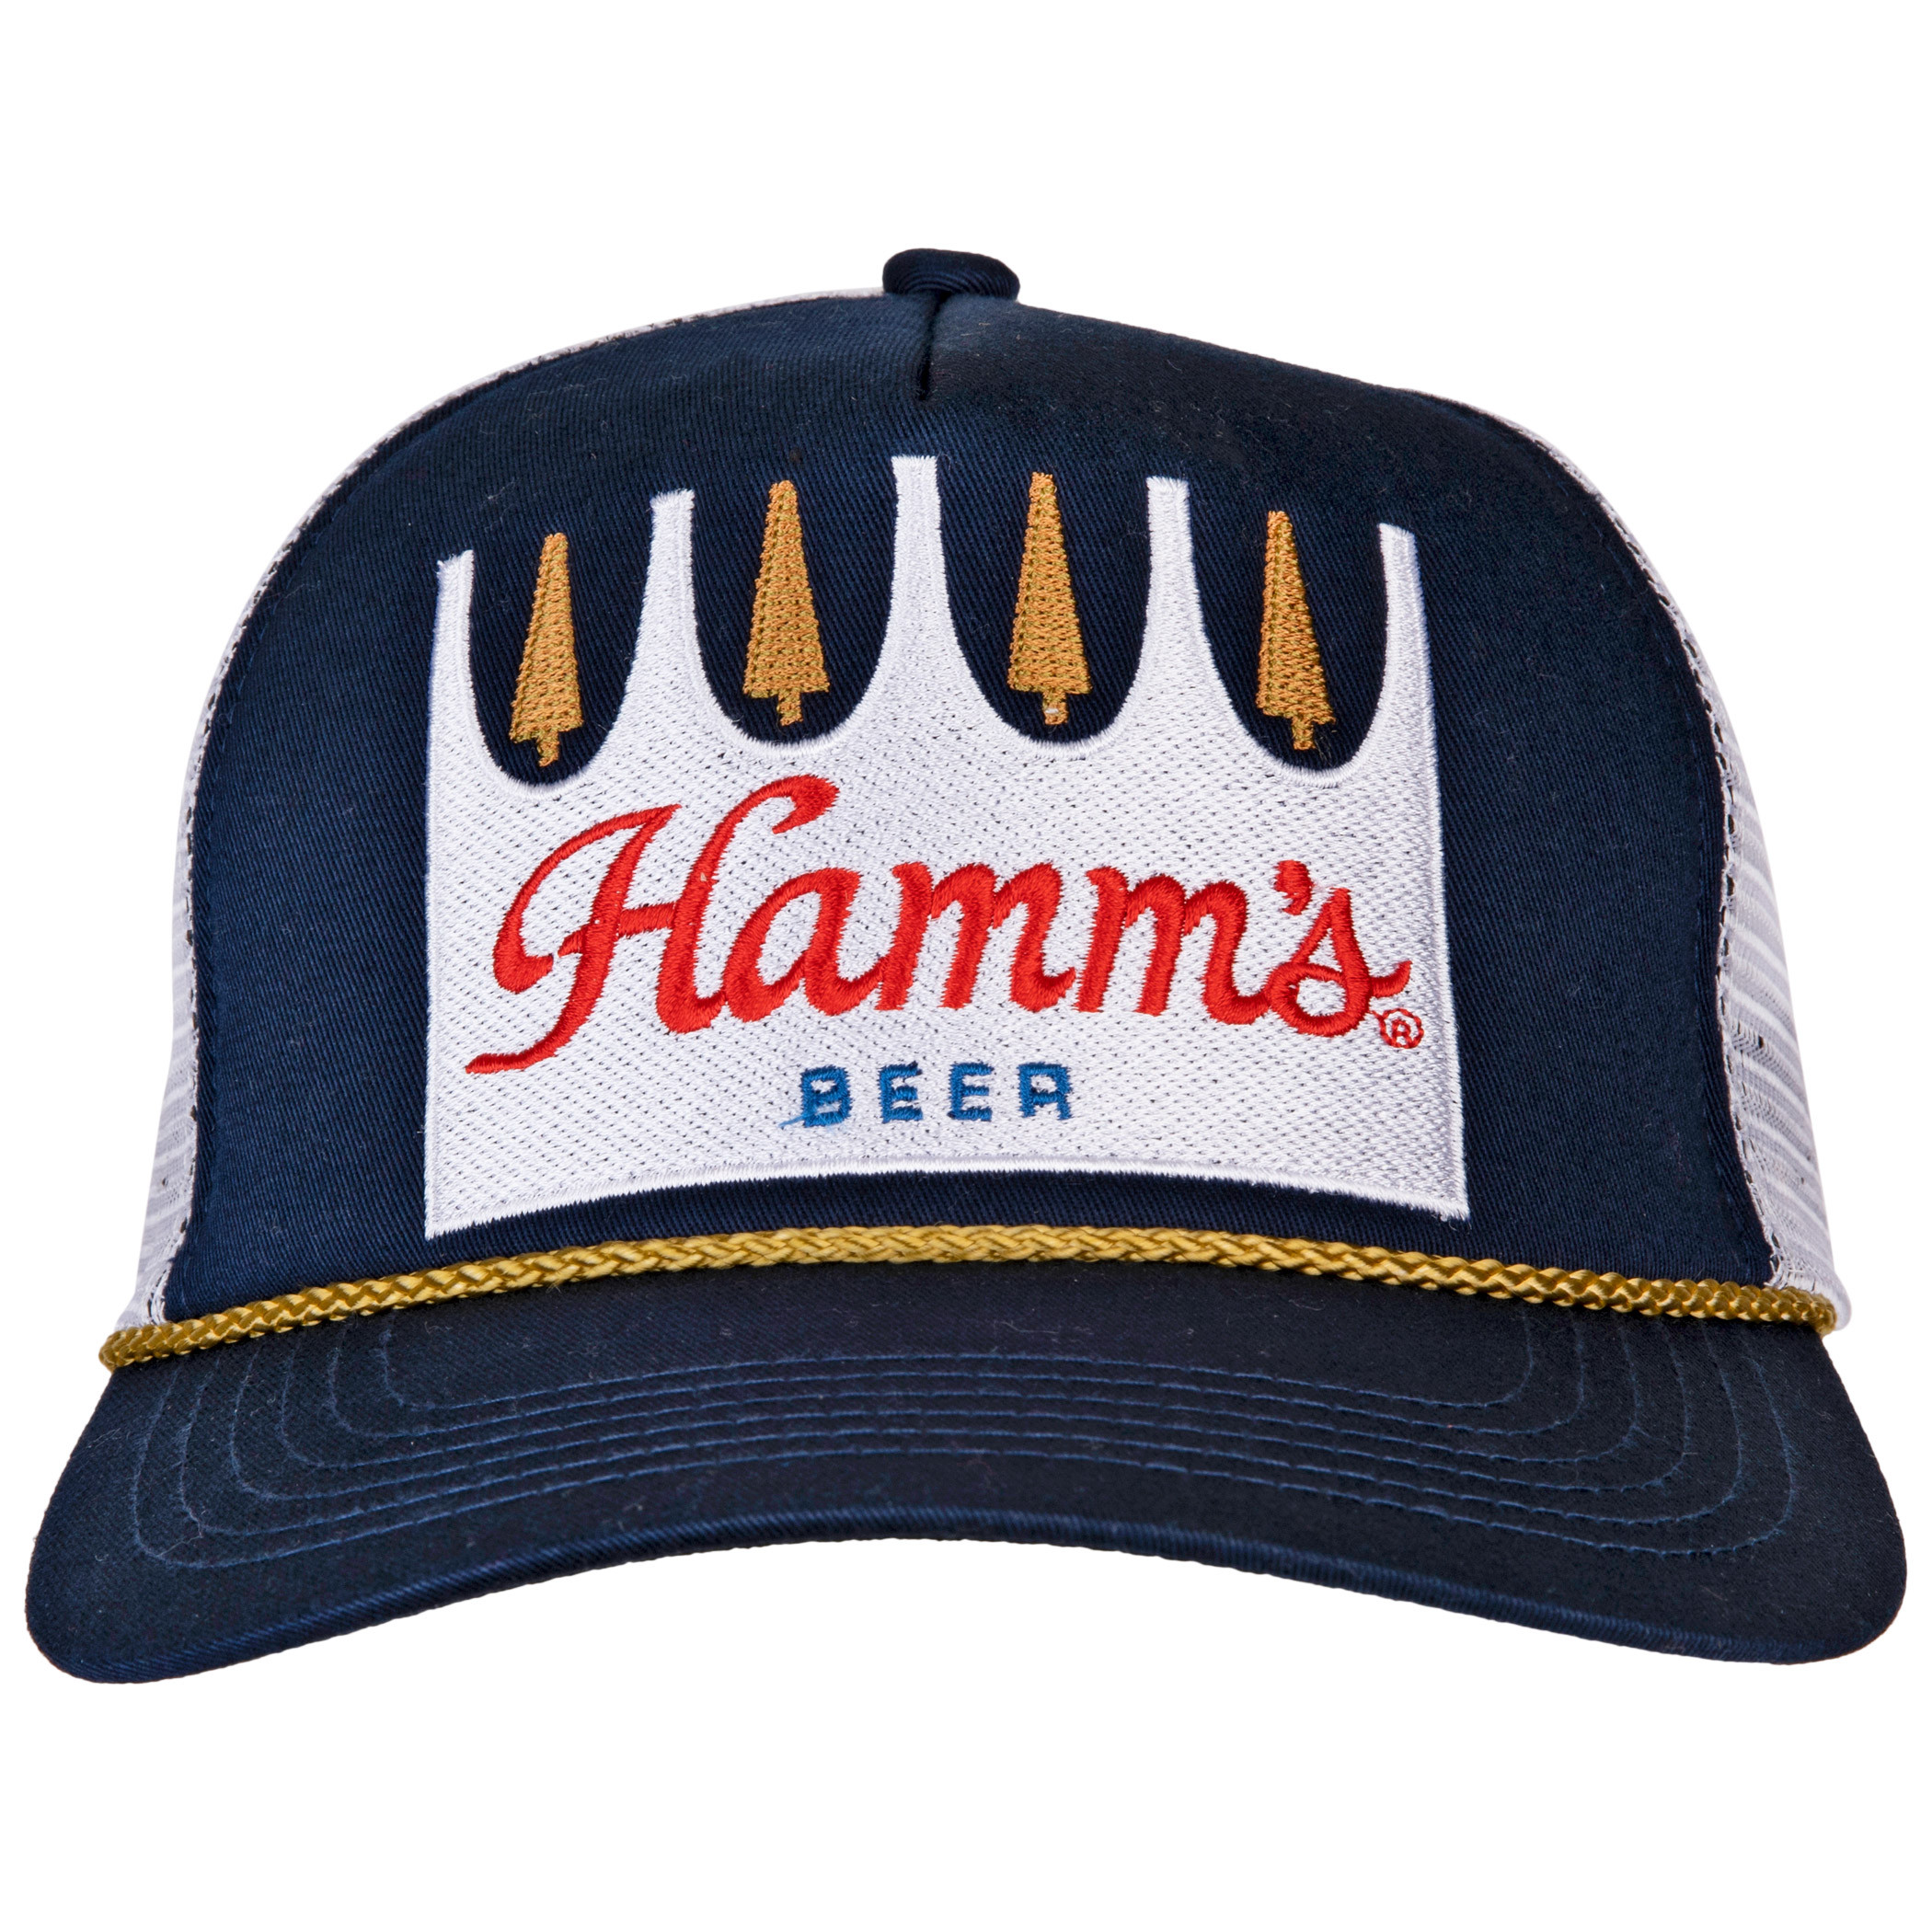 Hamm's Beer Trucker Mesh Snapback Hat